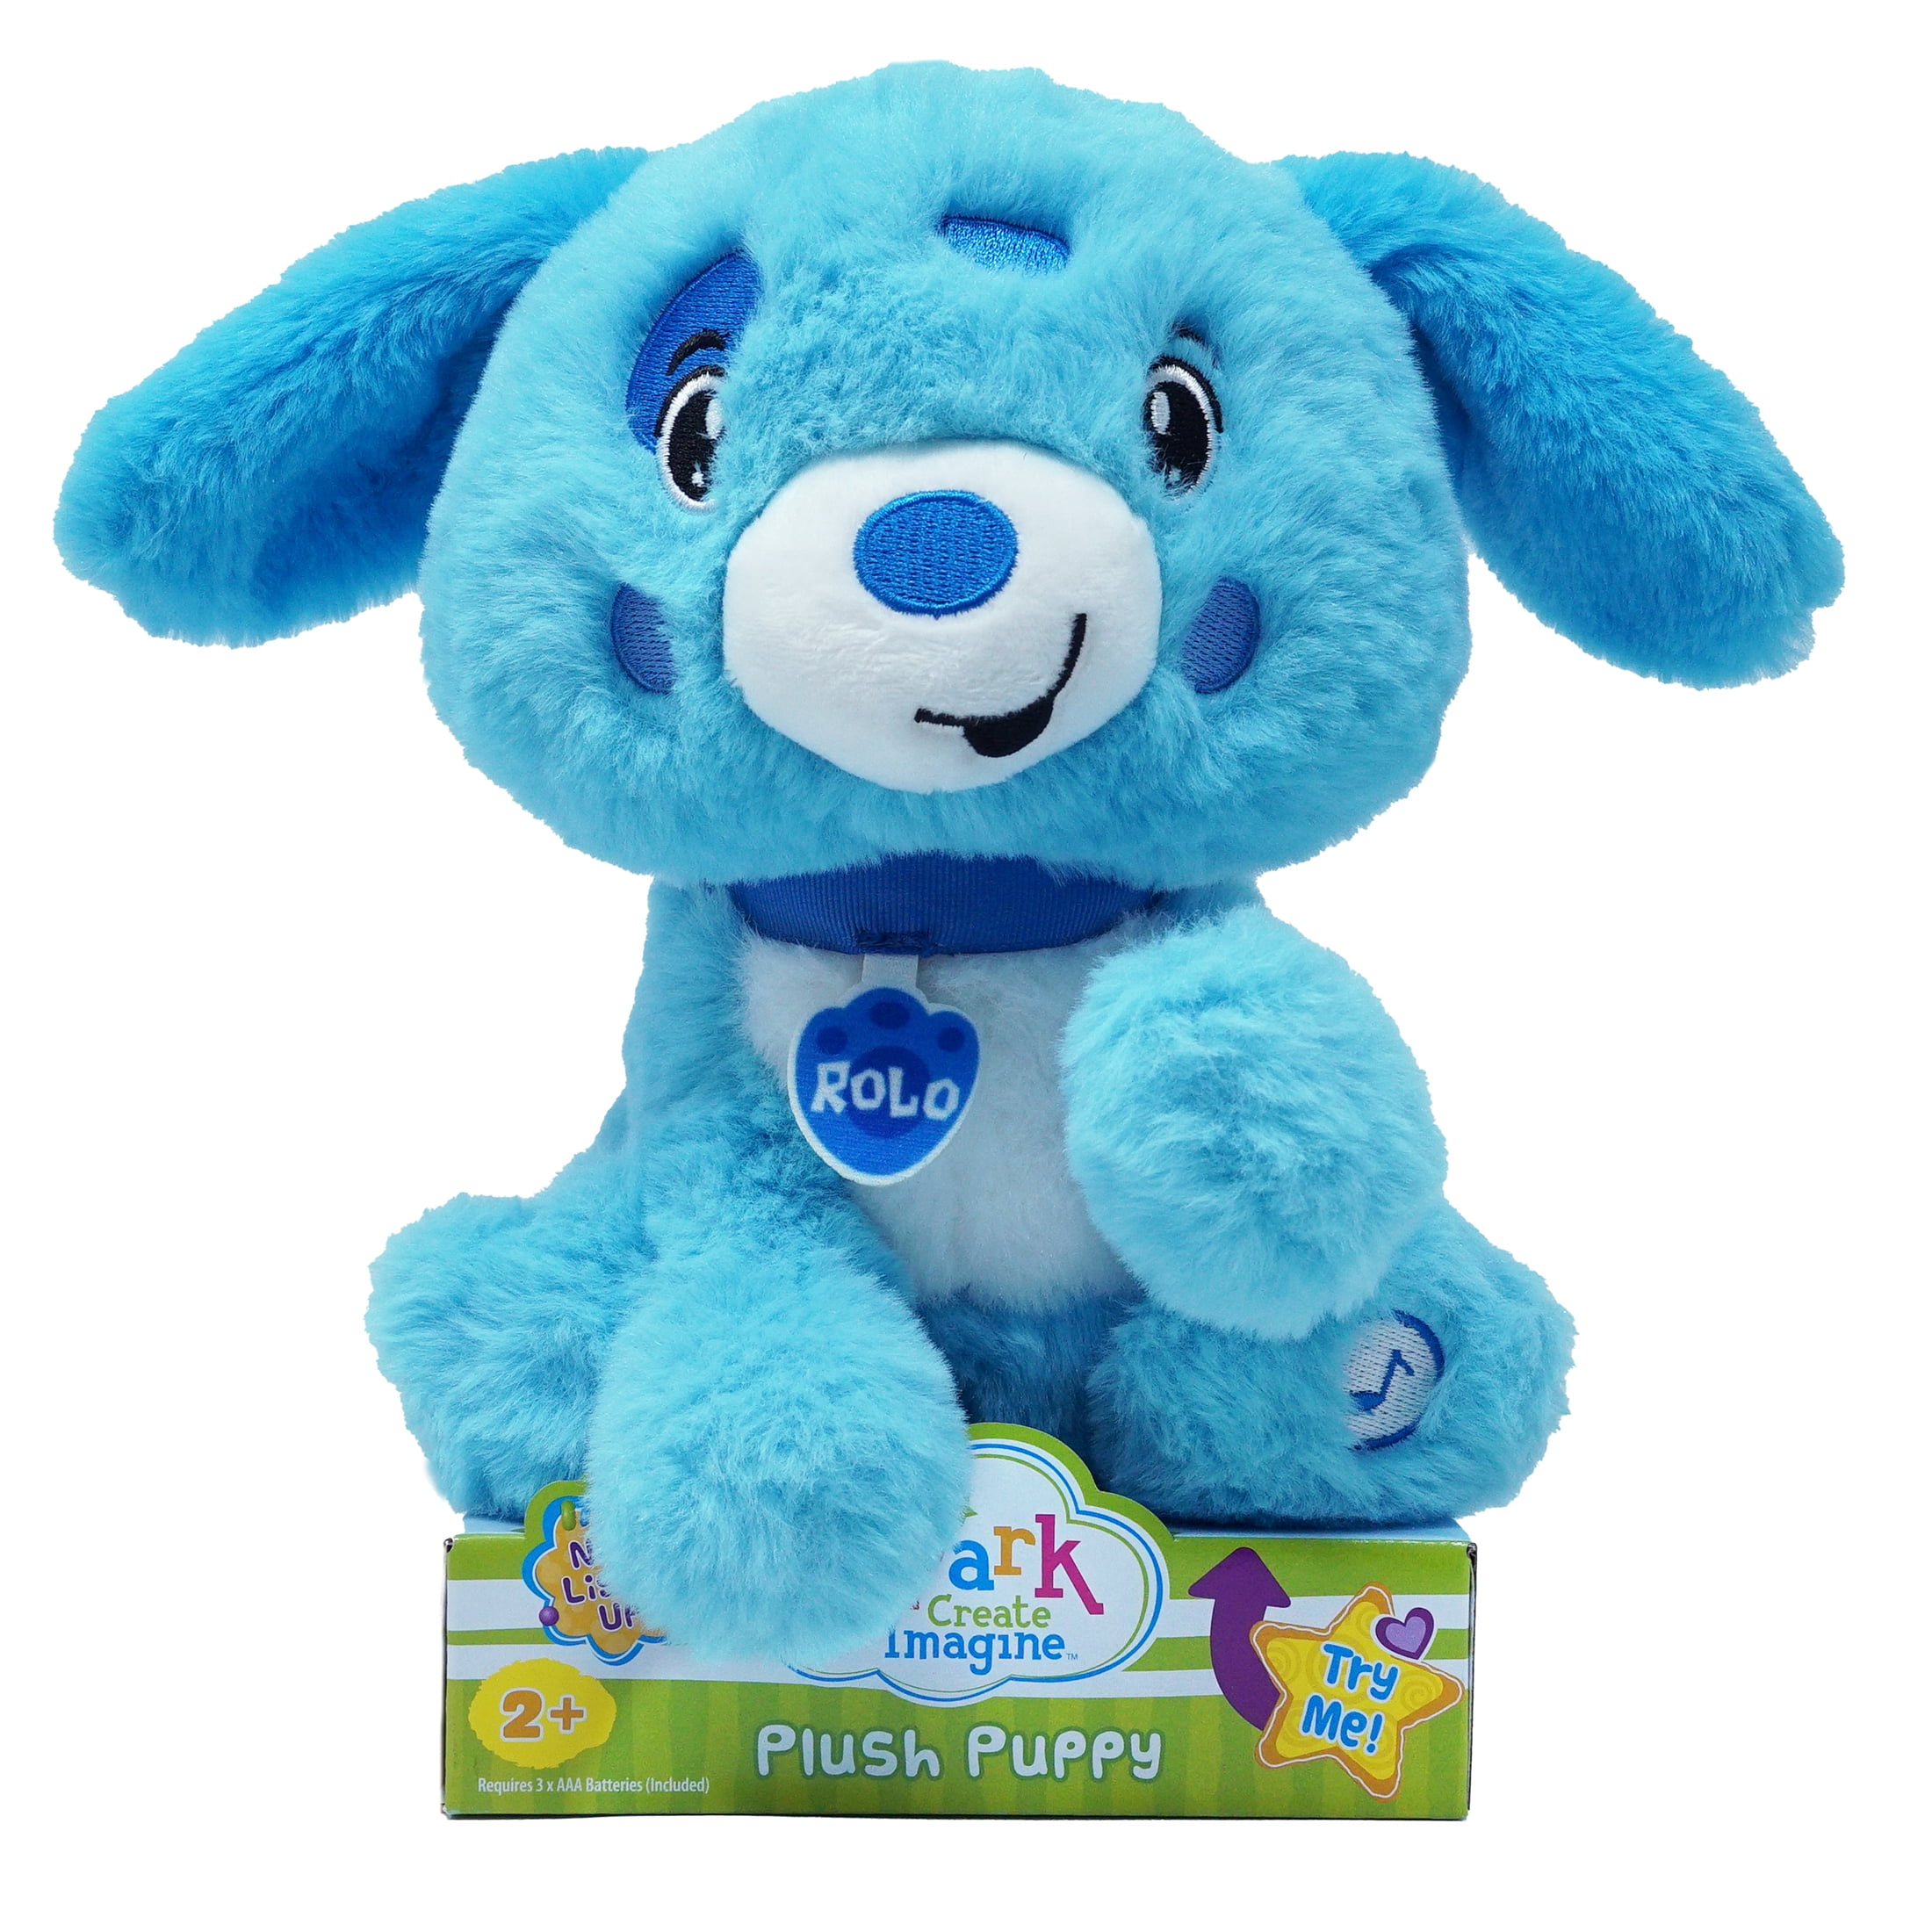 Spark Create Imagine 8.5” Rolo the Blue Puppy Plush Toy - Walmart.com